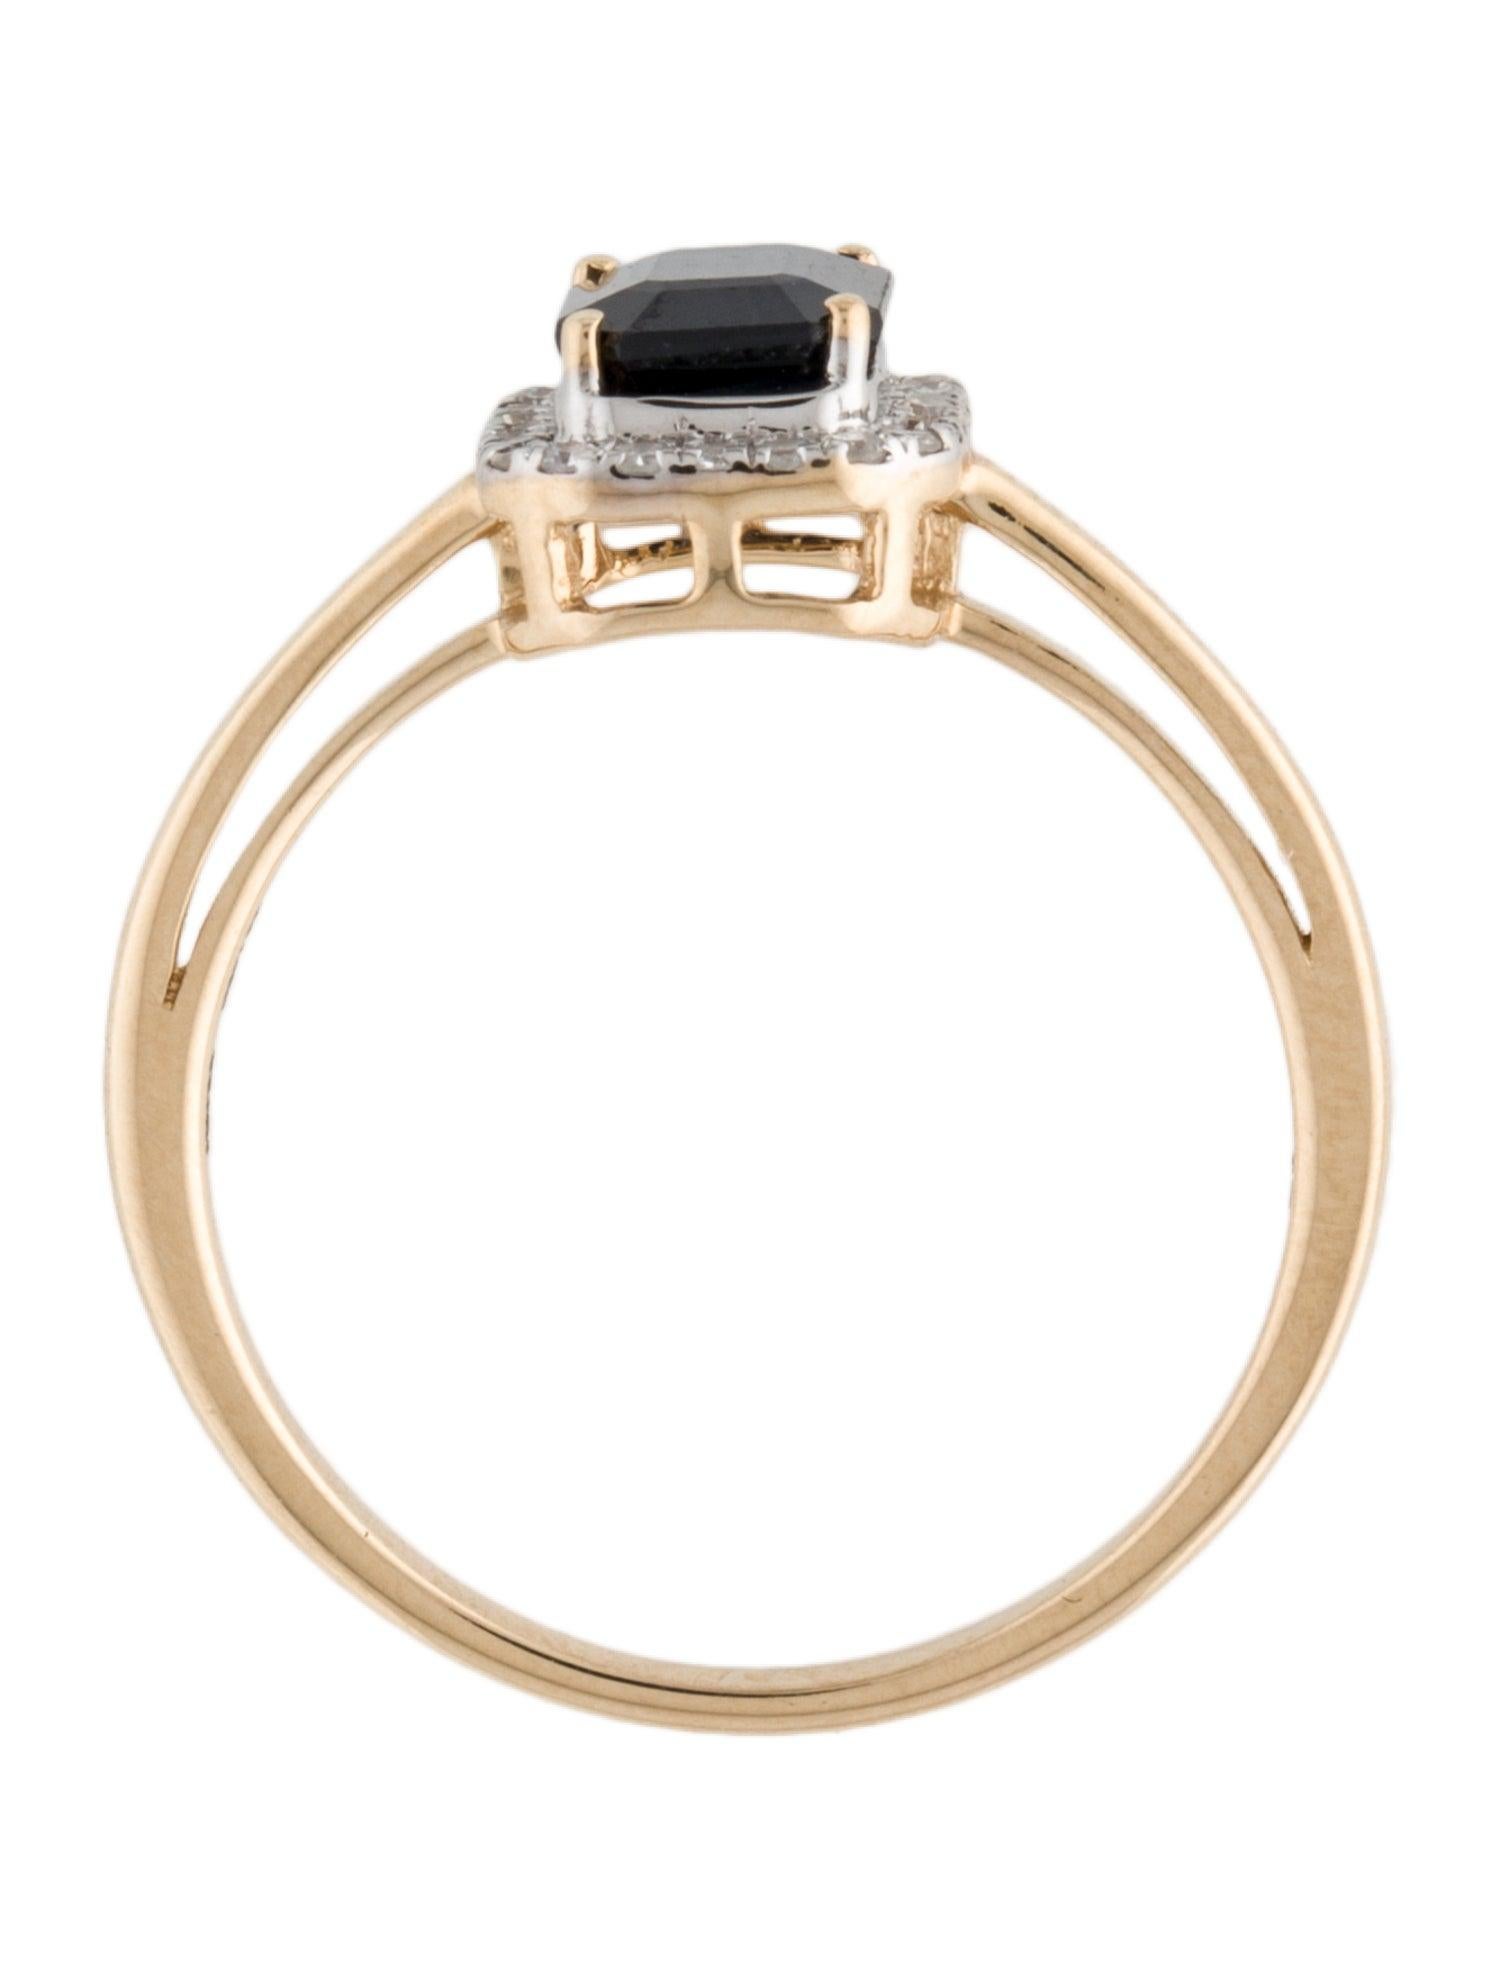 Elegant 14K Yellow Gold Emerald Cut Sapphire & Diamond Cocktail Ring, 1.11ctw For Sale 1